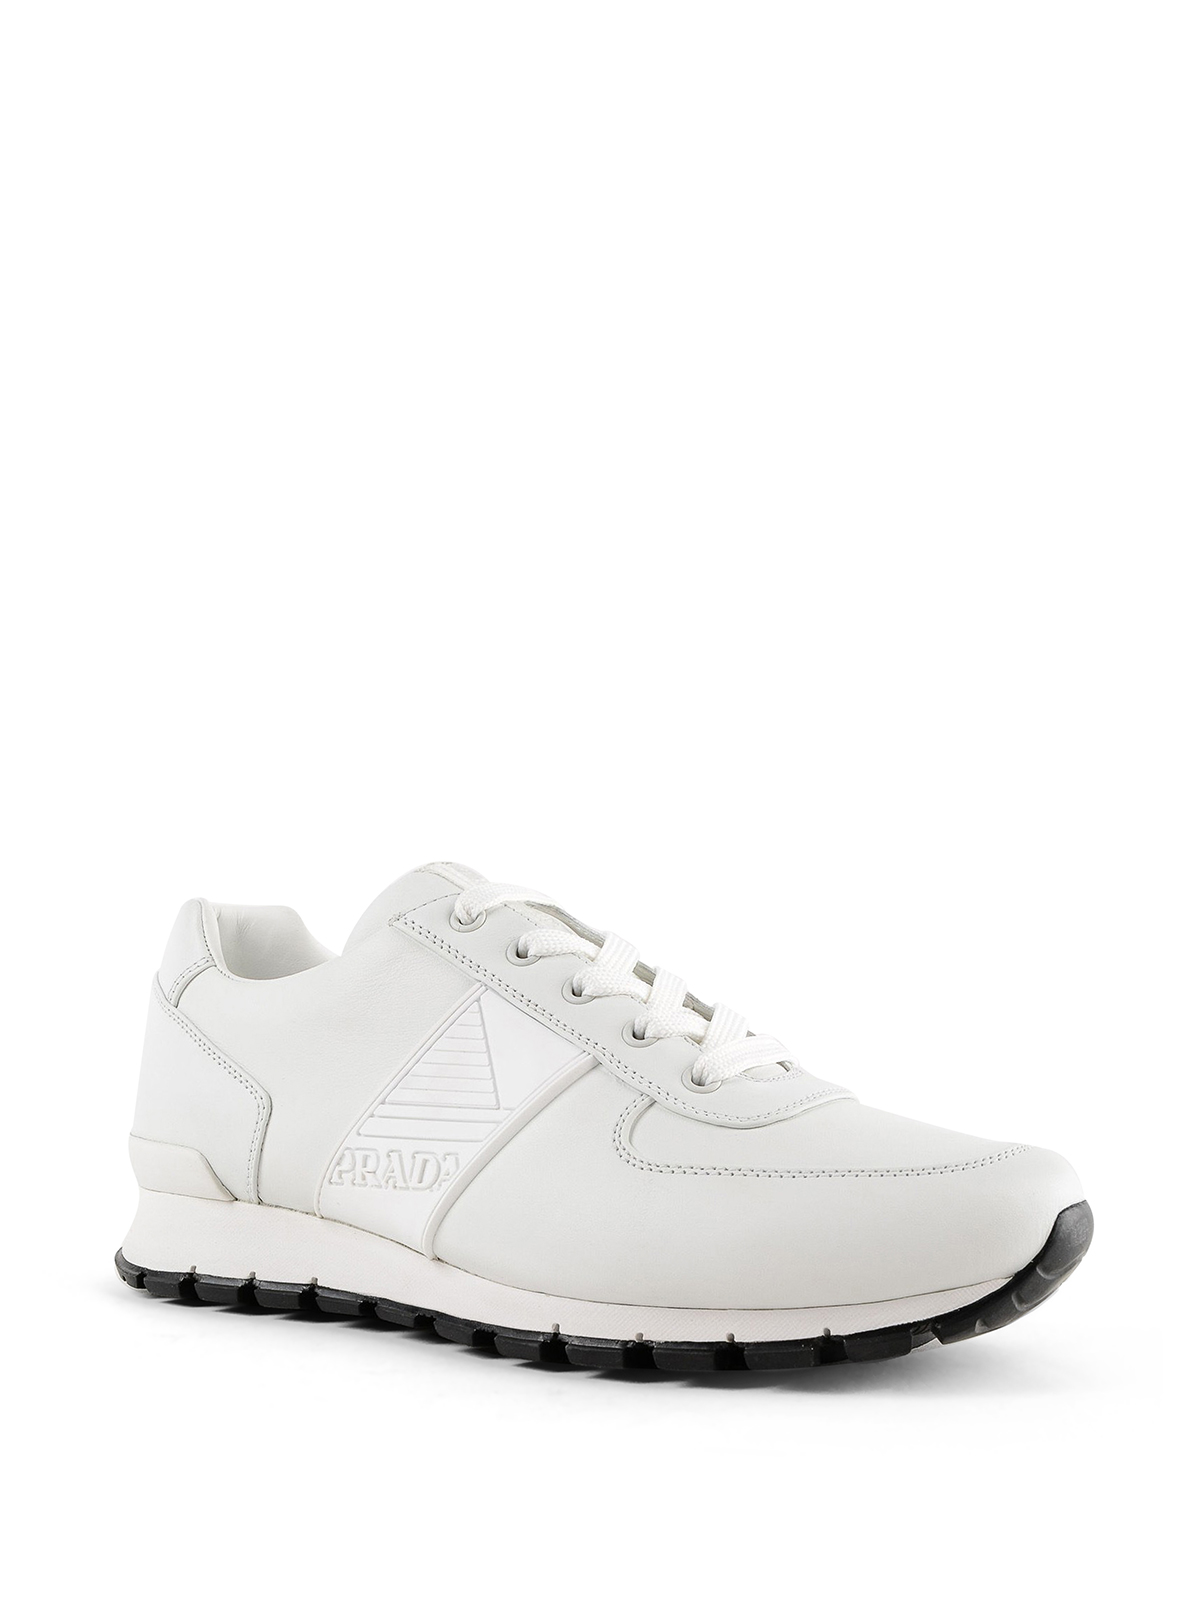 Trainers - White Race sneakers - 4E31983O9U009